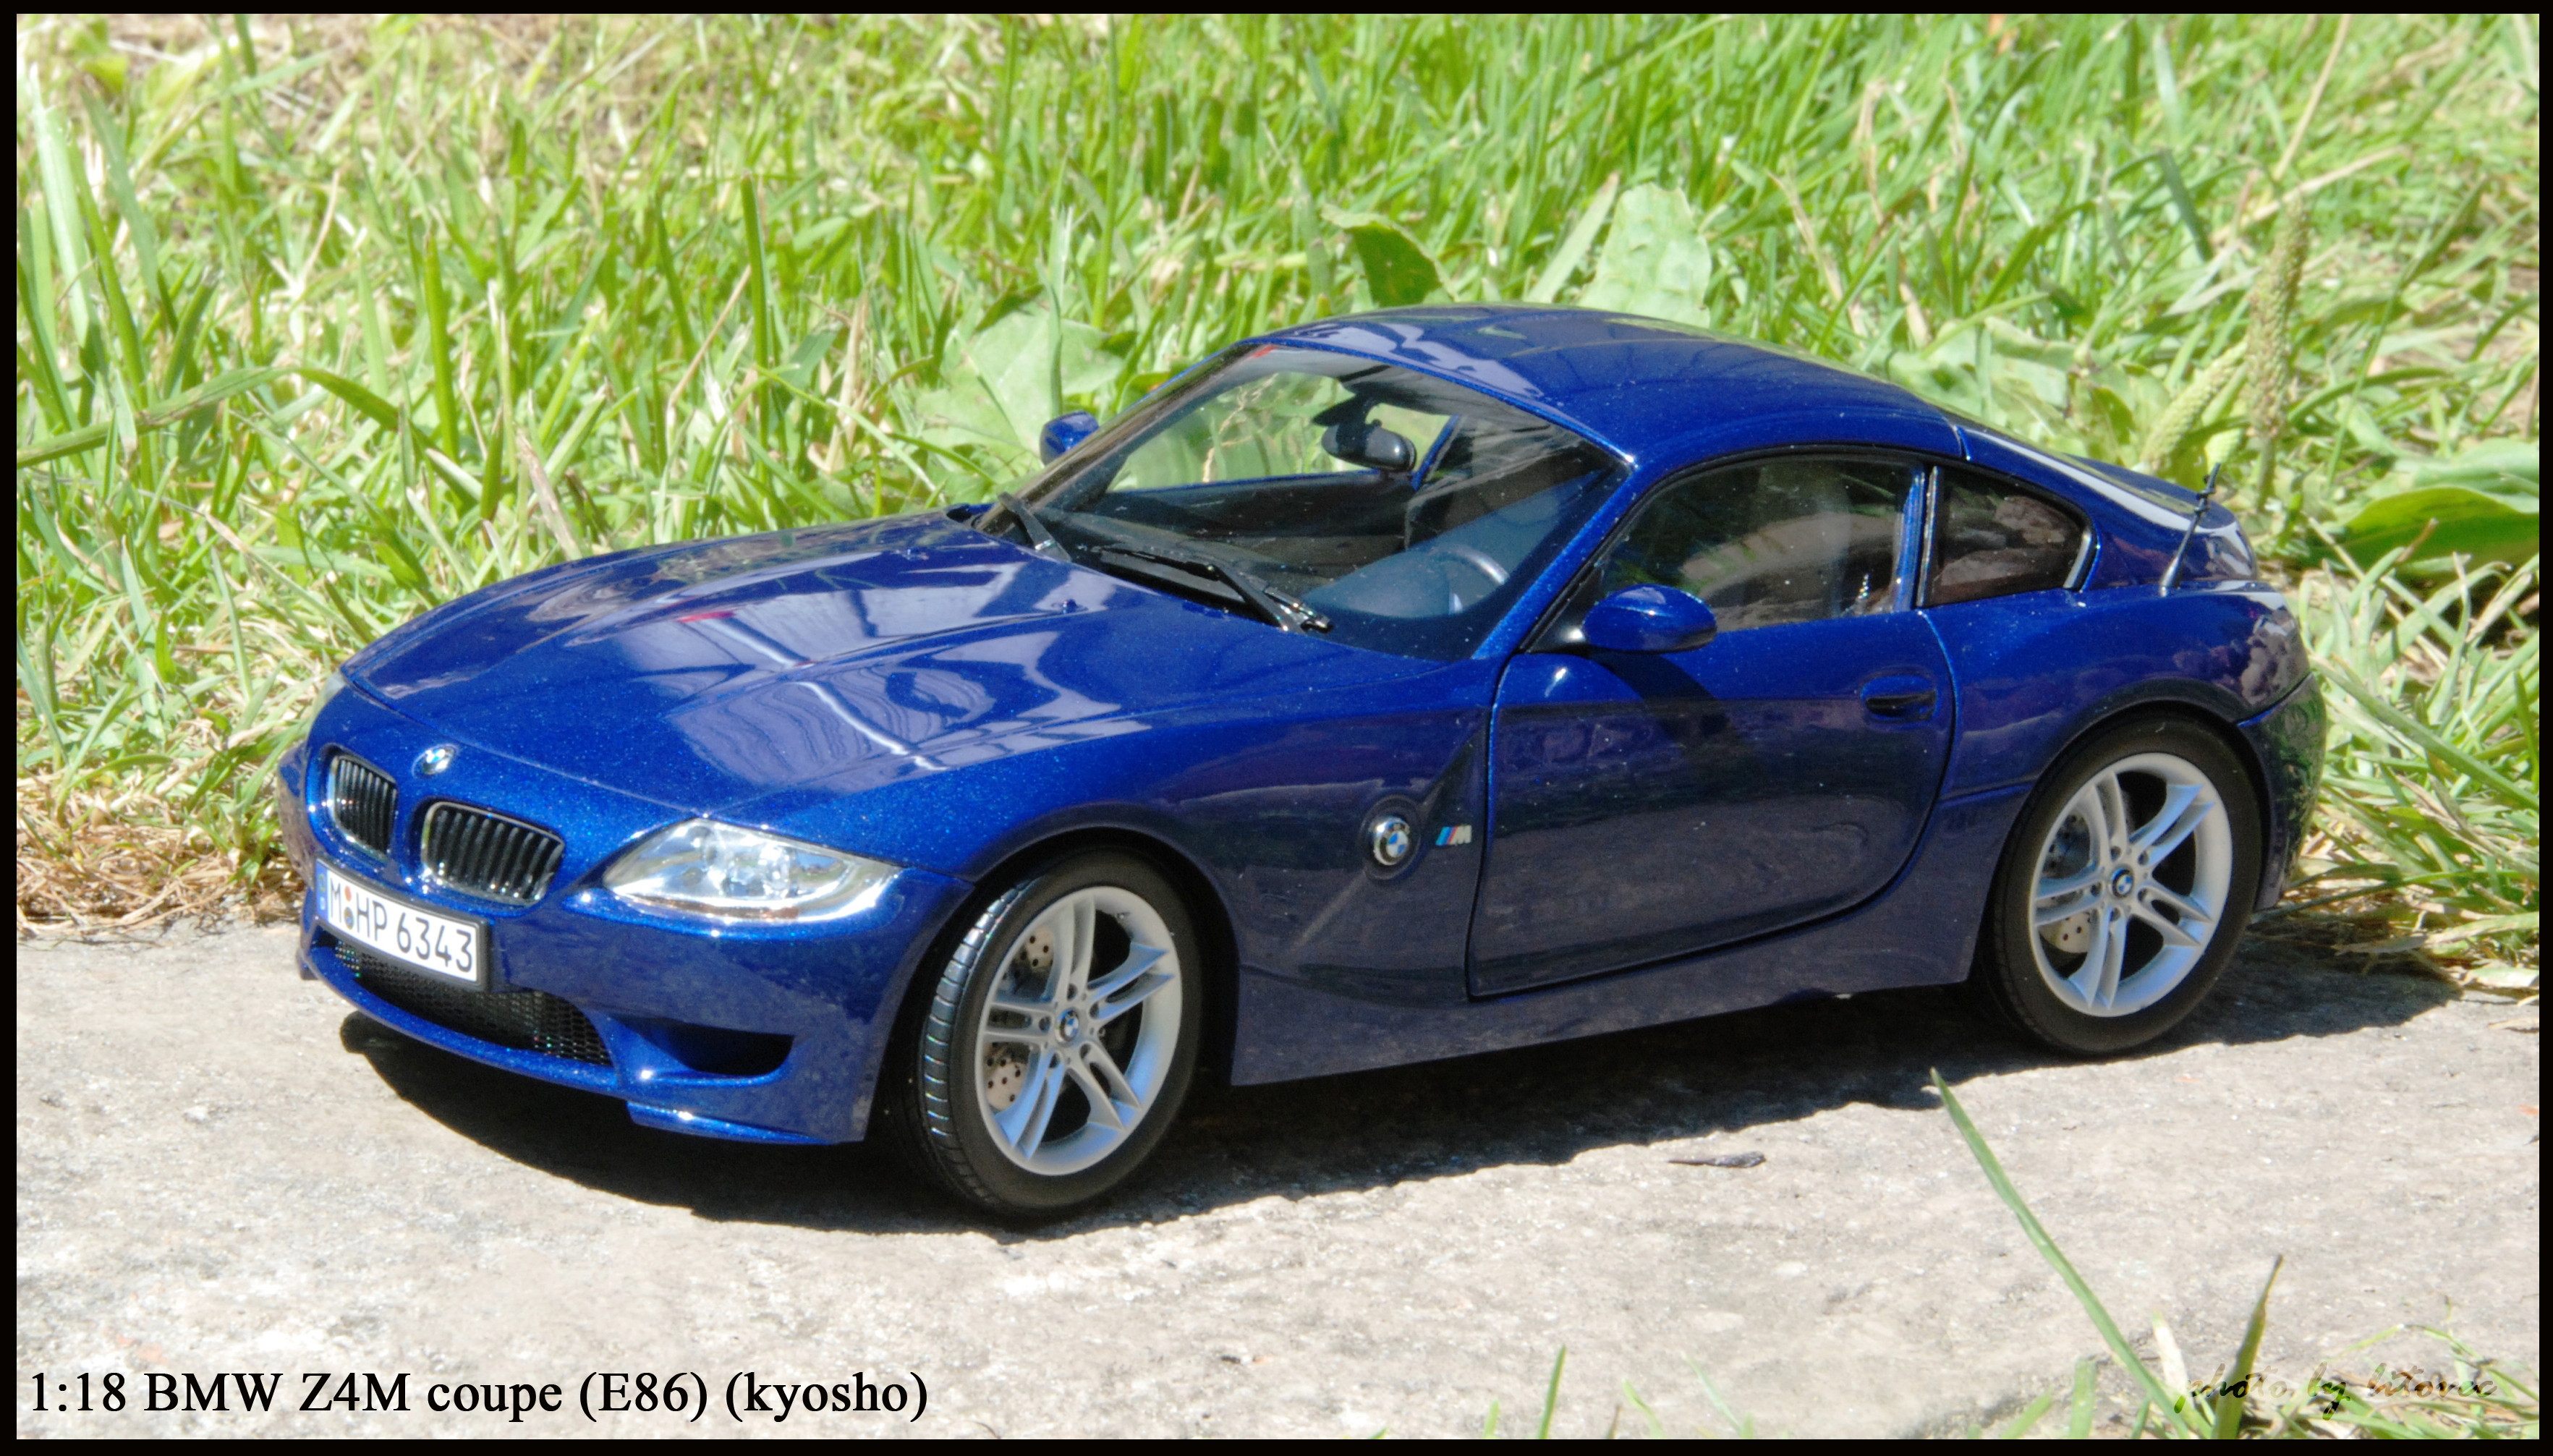 BMW Z4M coupe (E86) blue (kyosho) 